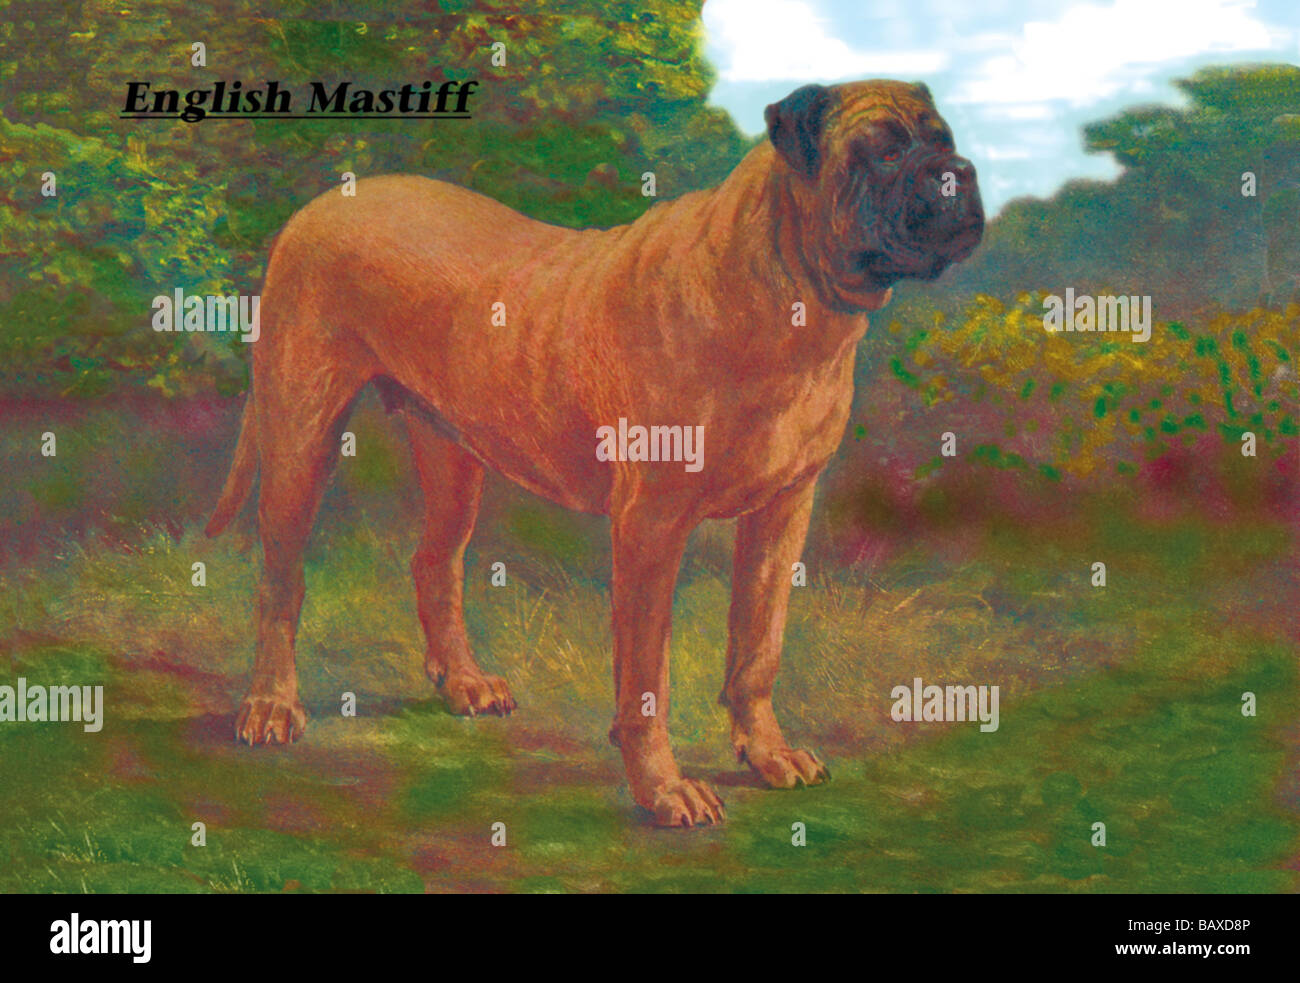 English Mastiff Champion Stock Photo - Alamy